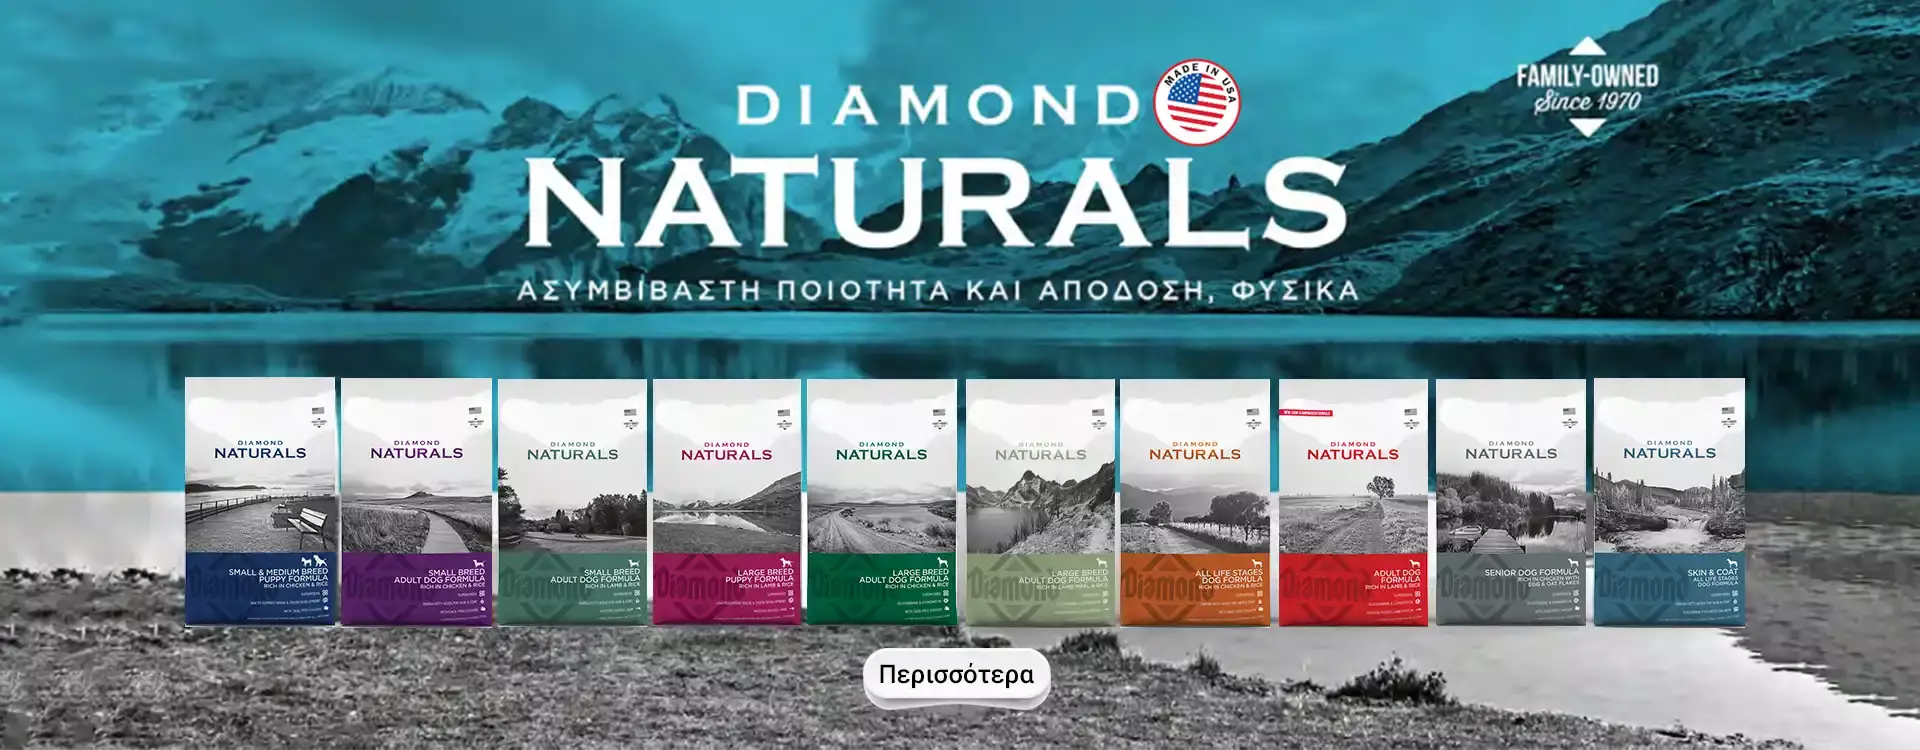 Diamond Naturals Dog Food Desktop